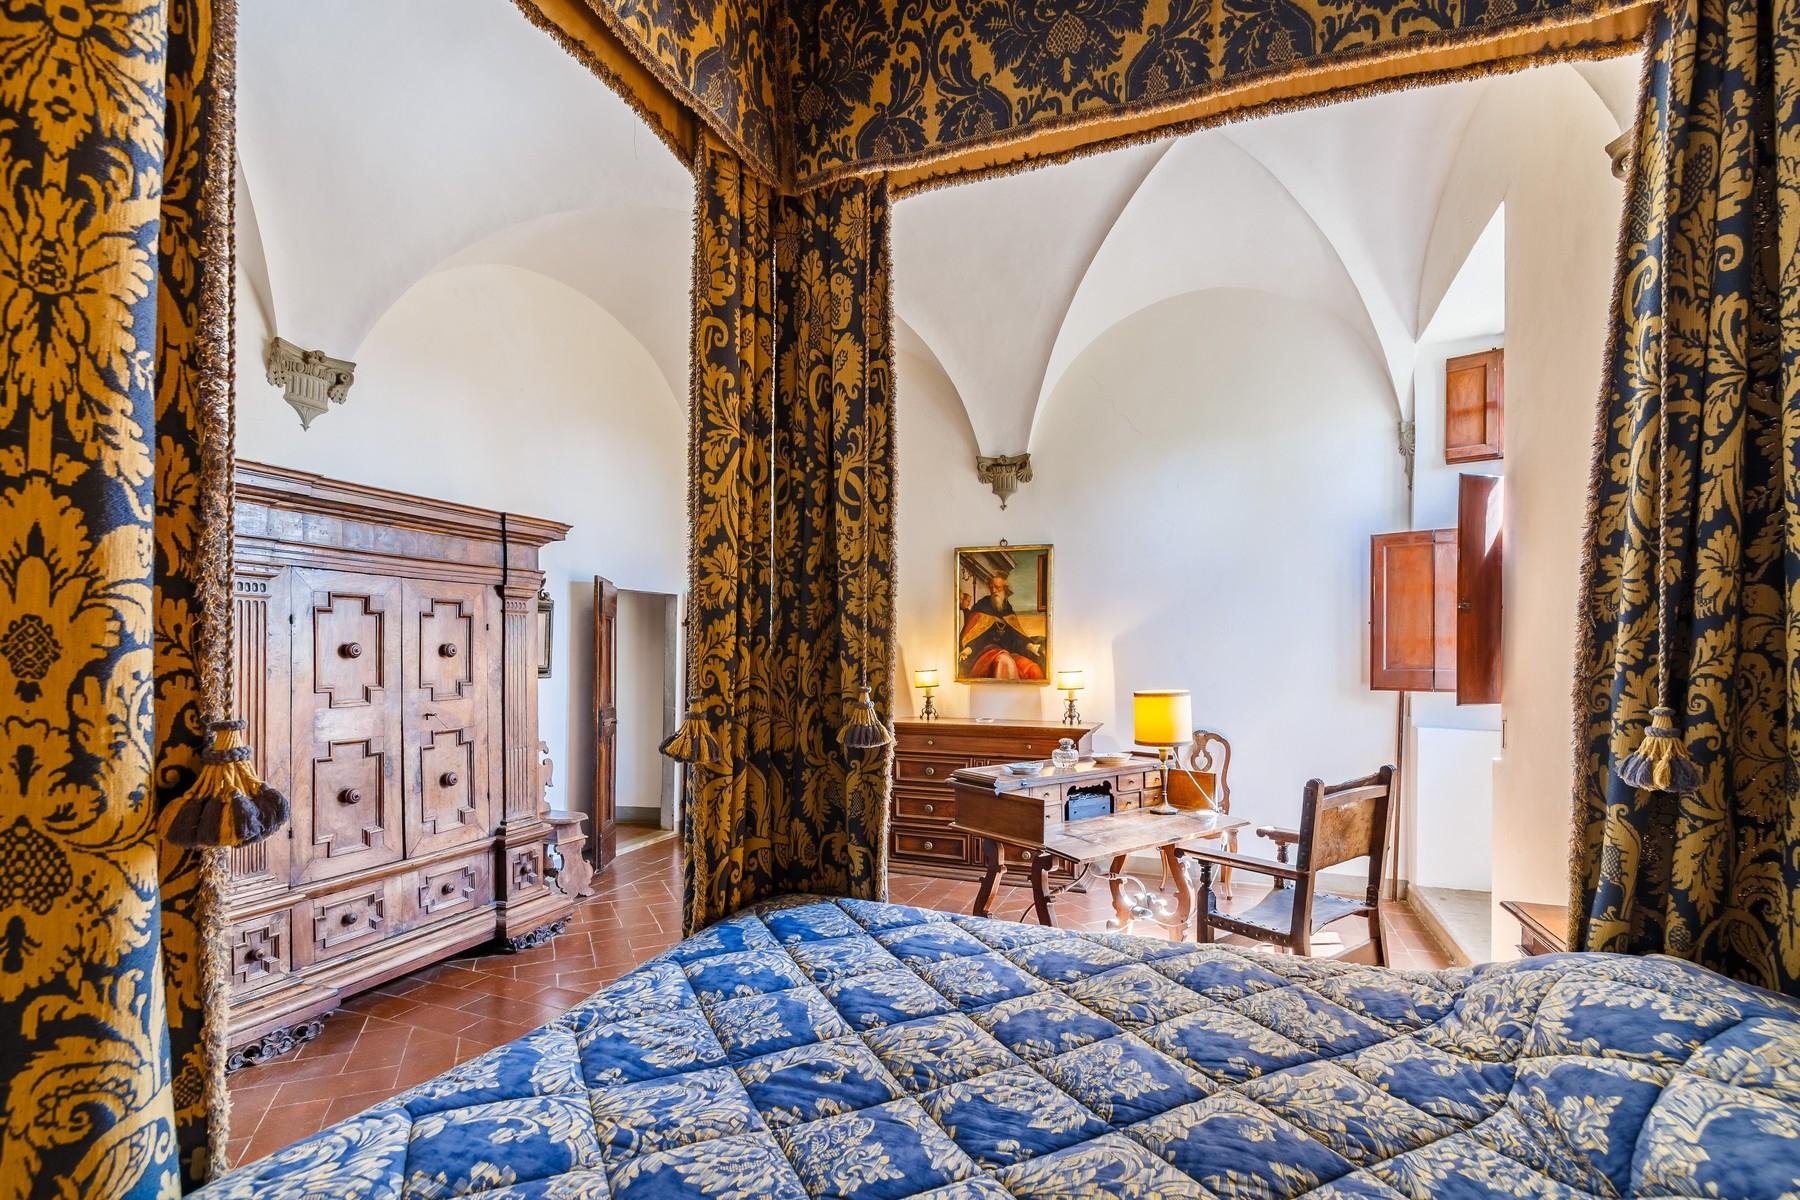 Francis York Medieval Castle Turned Renaissance Villa in Tuscany, Italy  00015.jpg